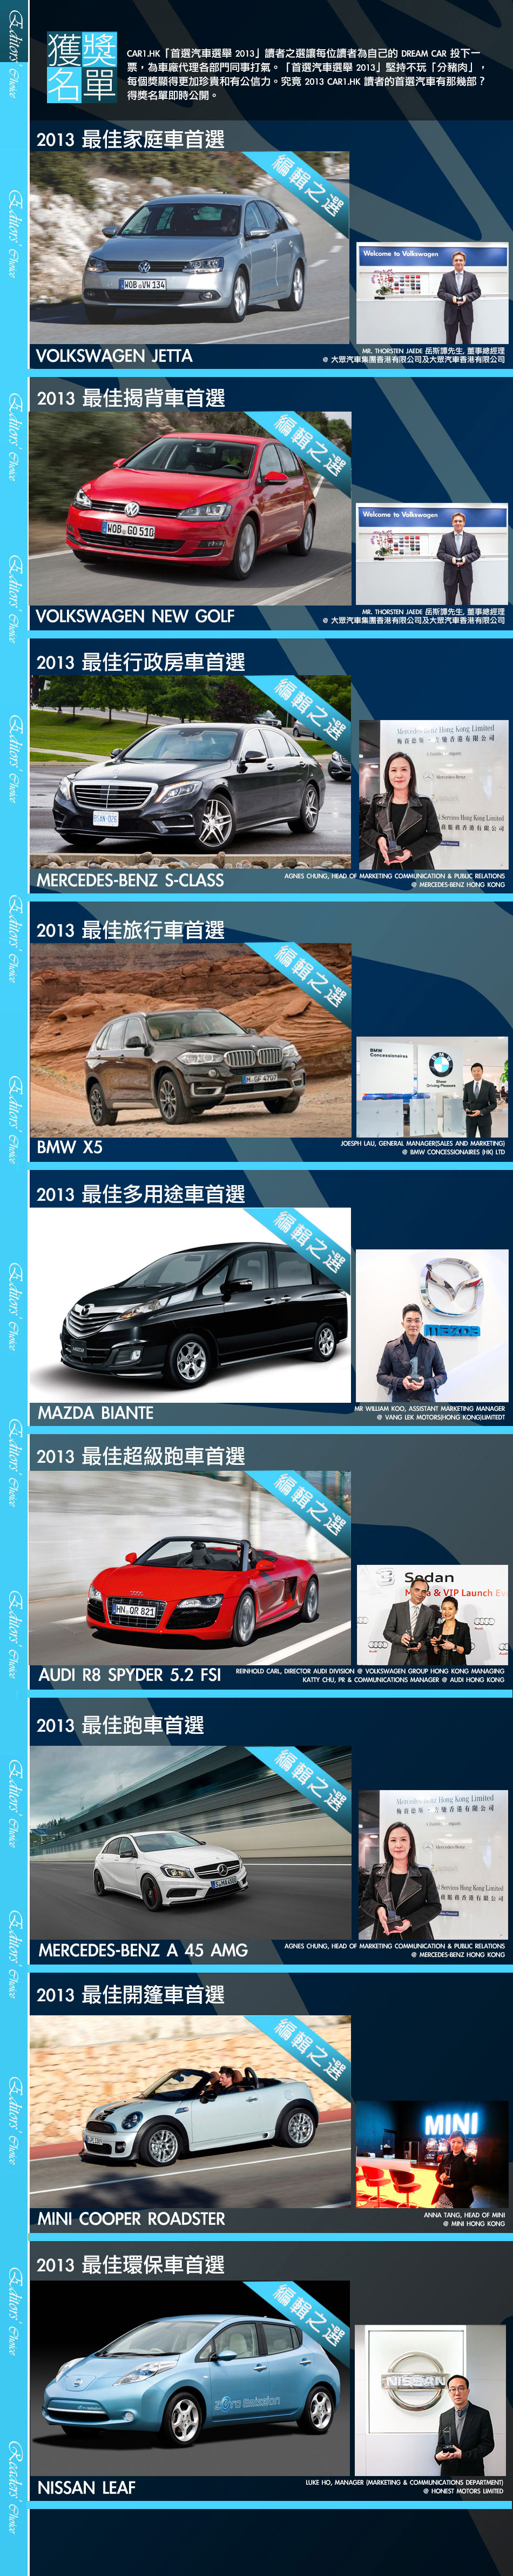 Car1.hk「首選汽車選舉 2013」「Editor’s Choice 編輯首選」